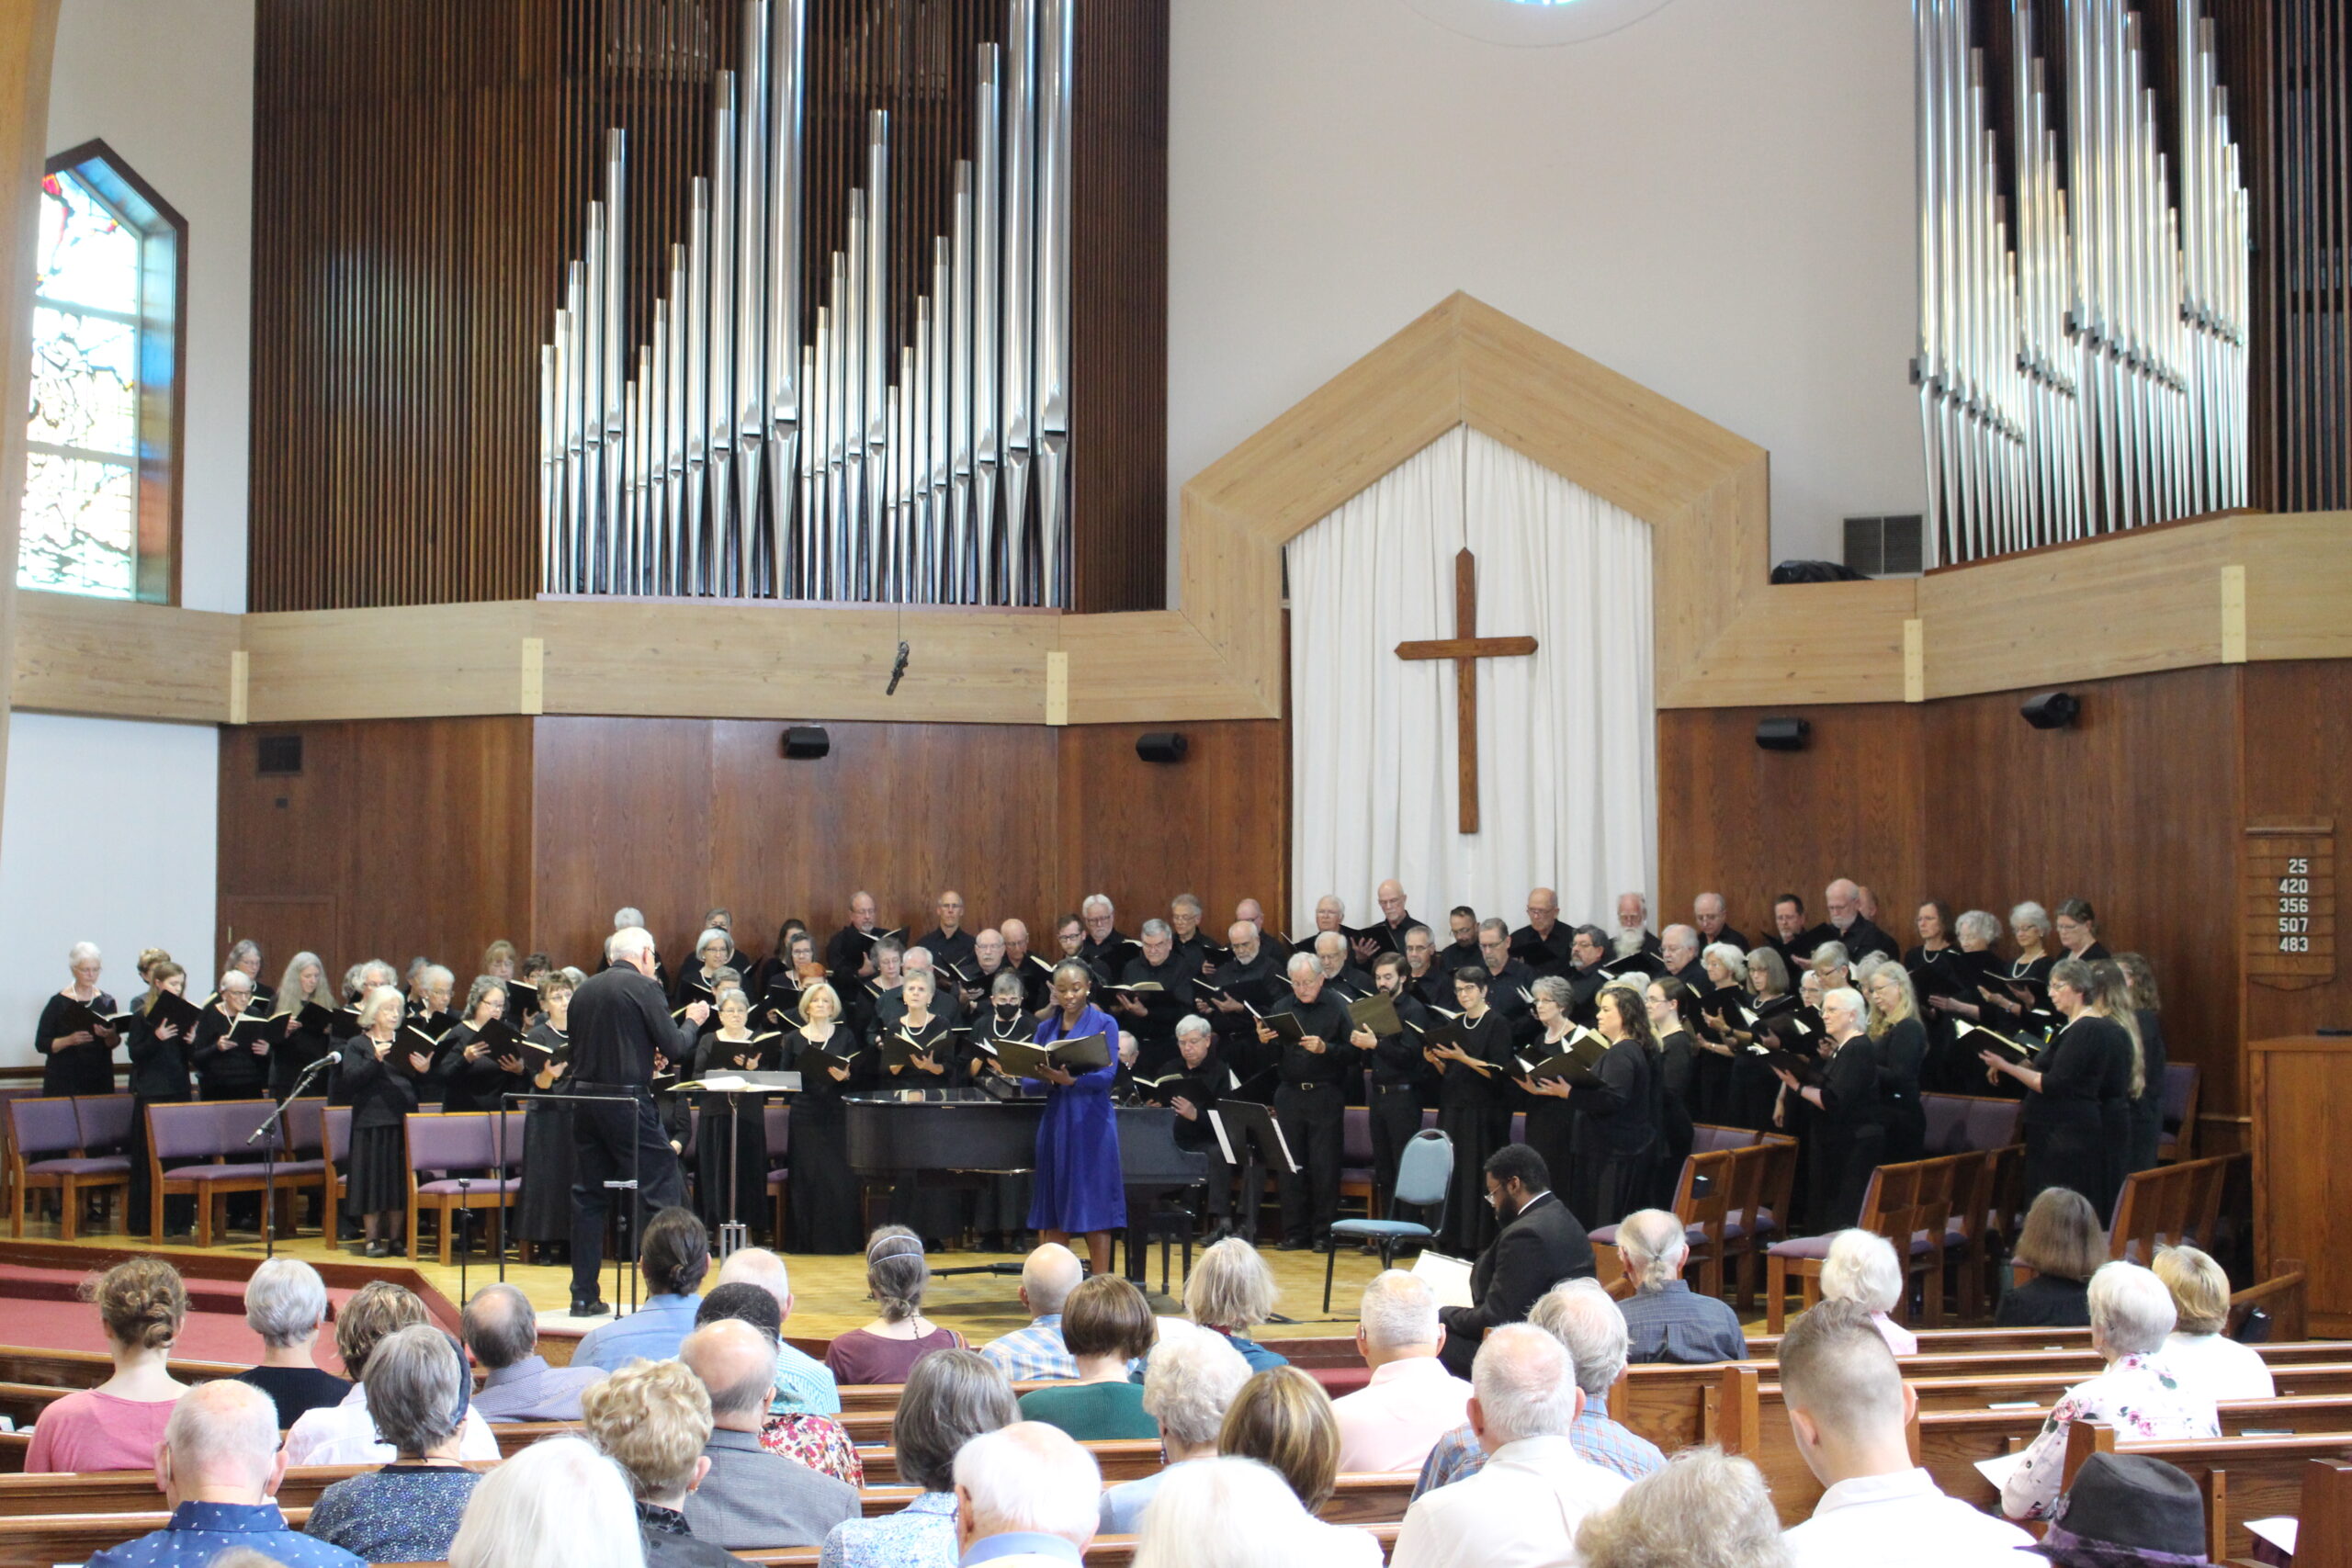 The Shenandoah Valley Choral Society